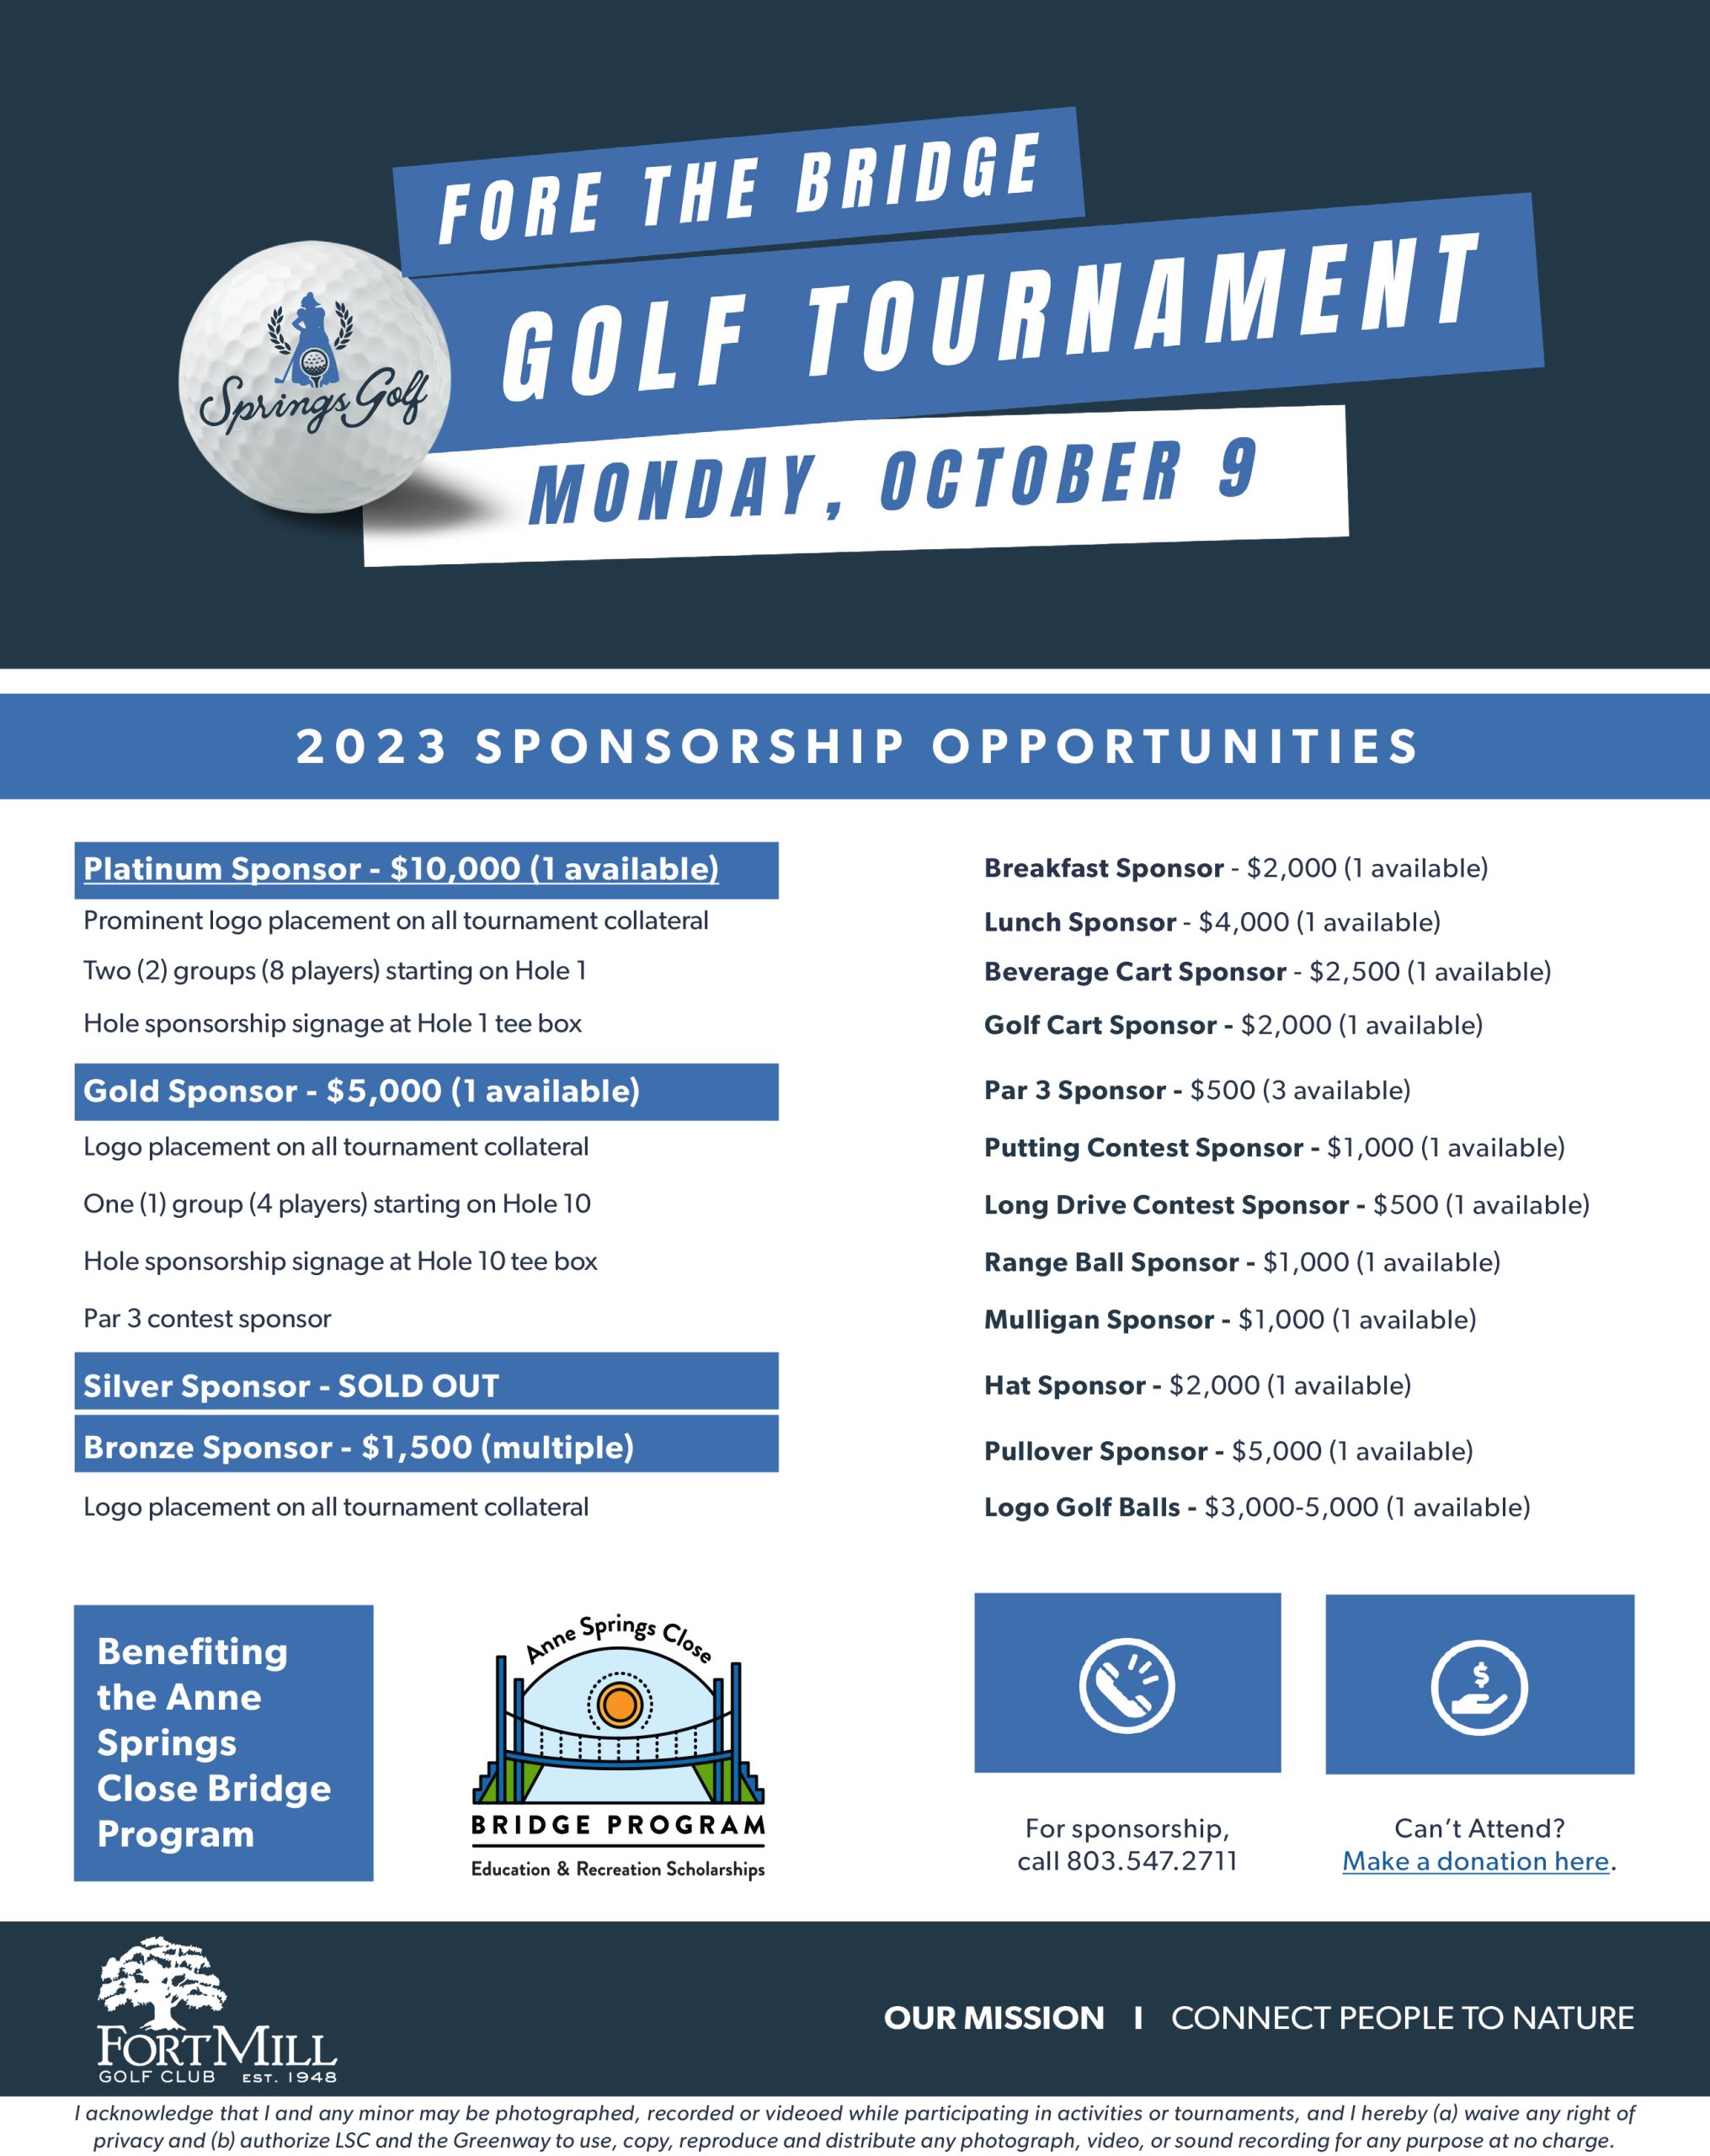 2023 "Fore the Bridge" Golf Tournament Sponsorship Information